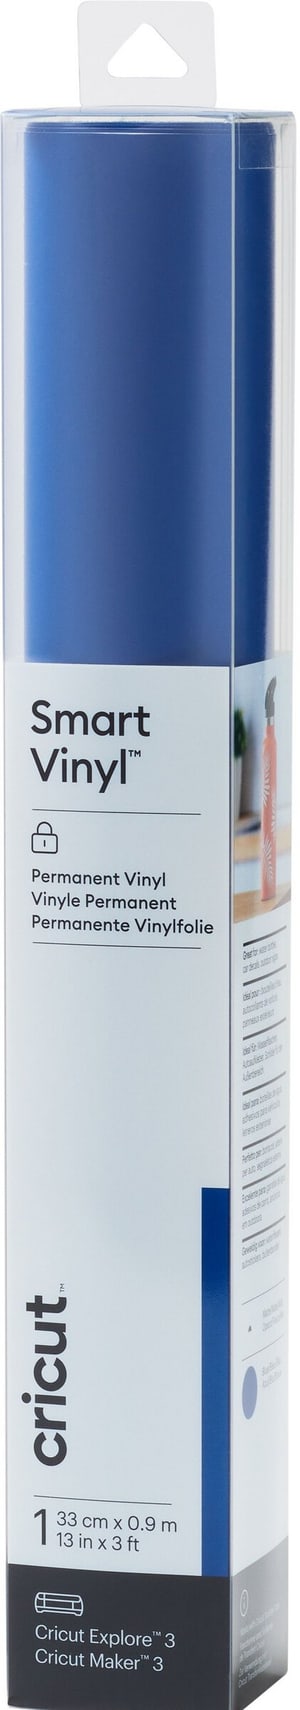 Vinylfolie Smart Matt Permanent 33 x 91 cm, Blau